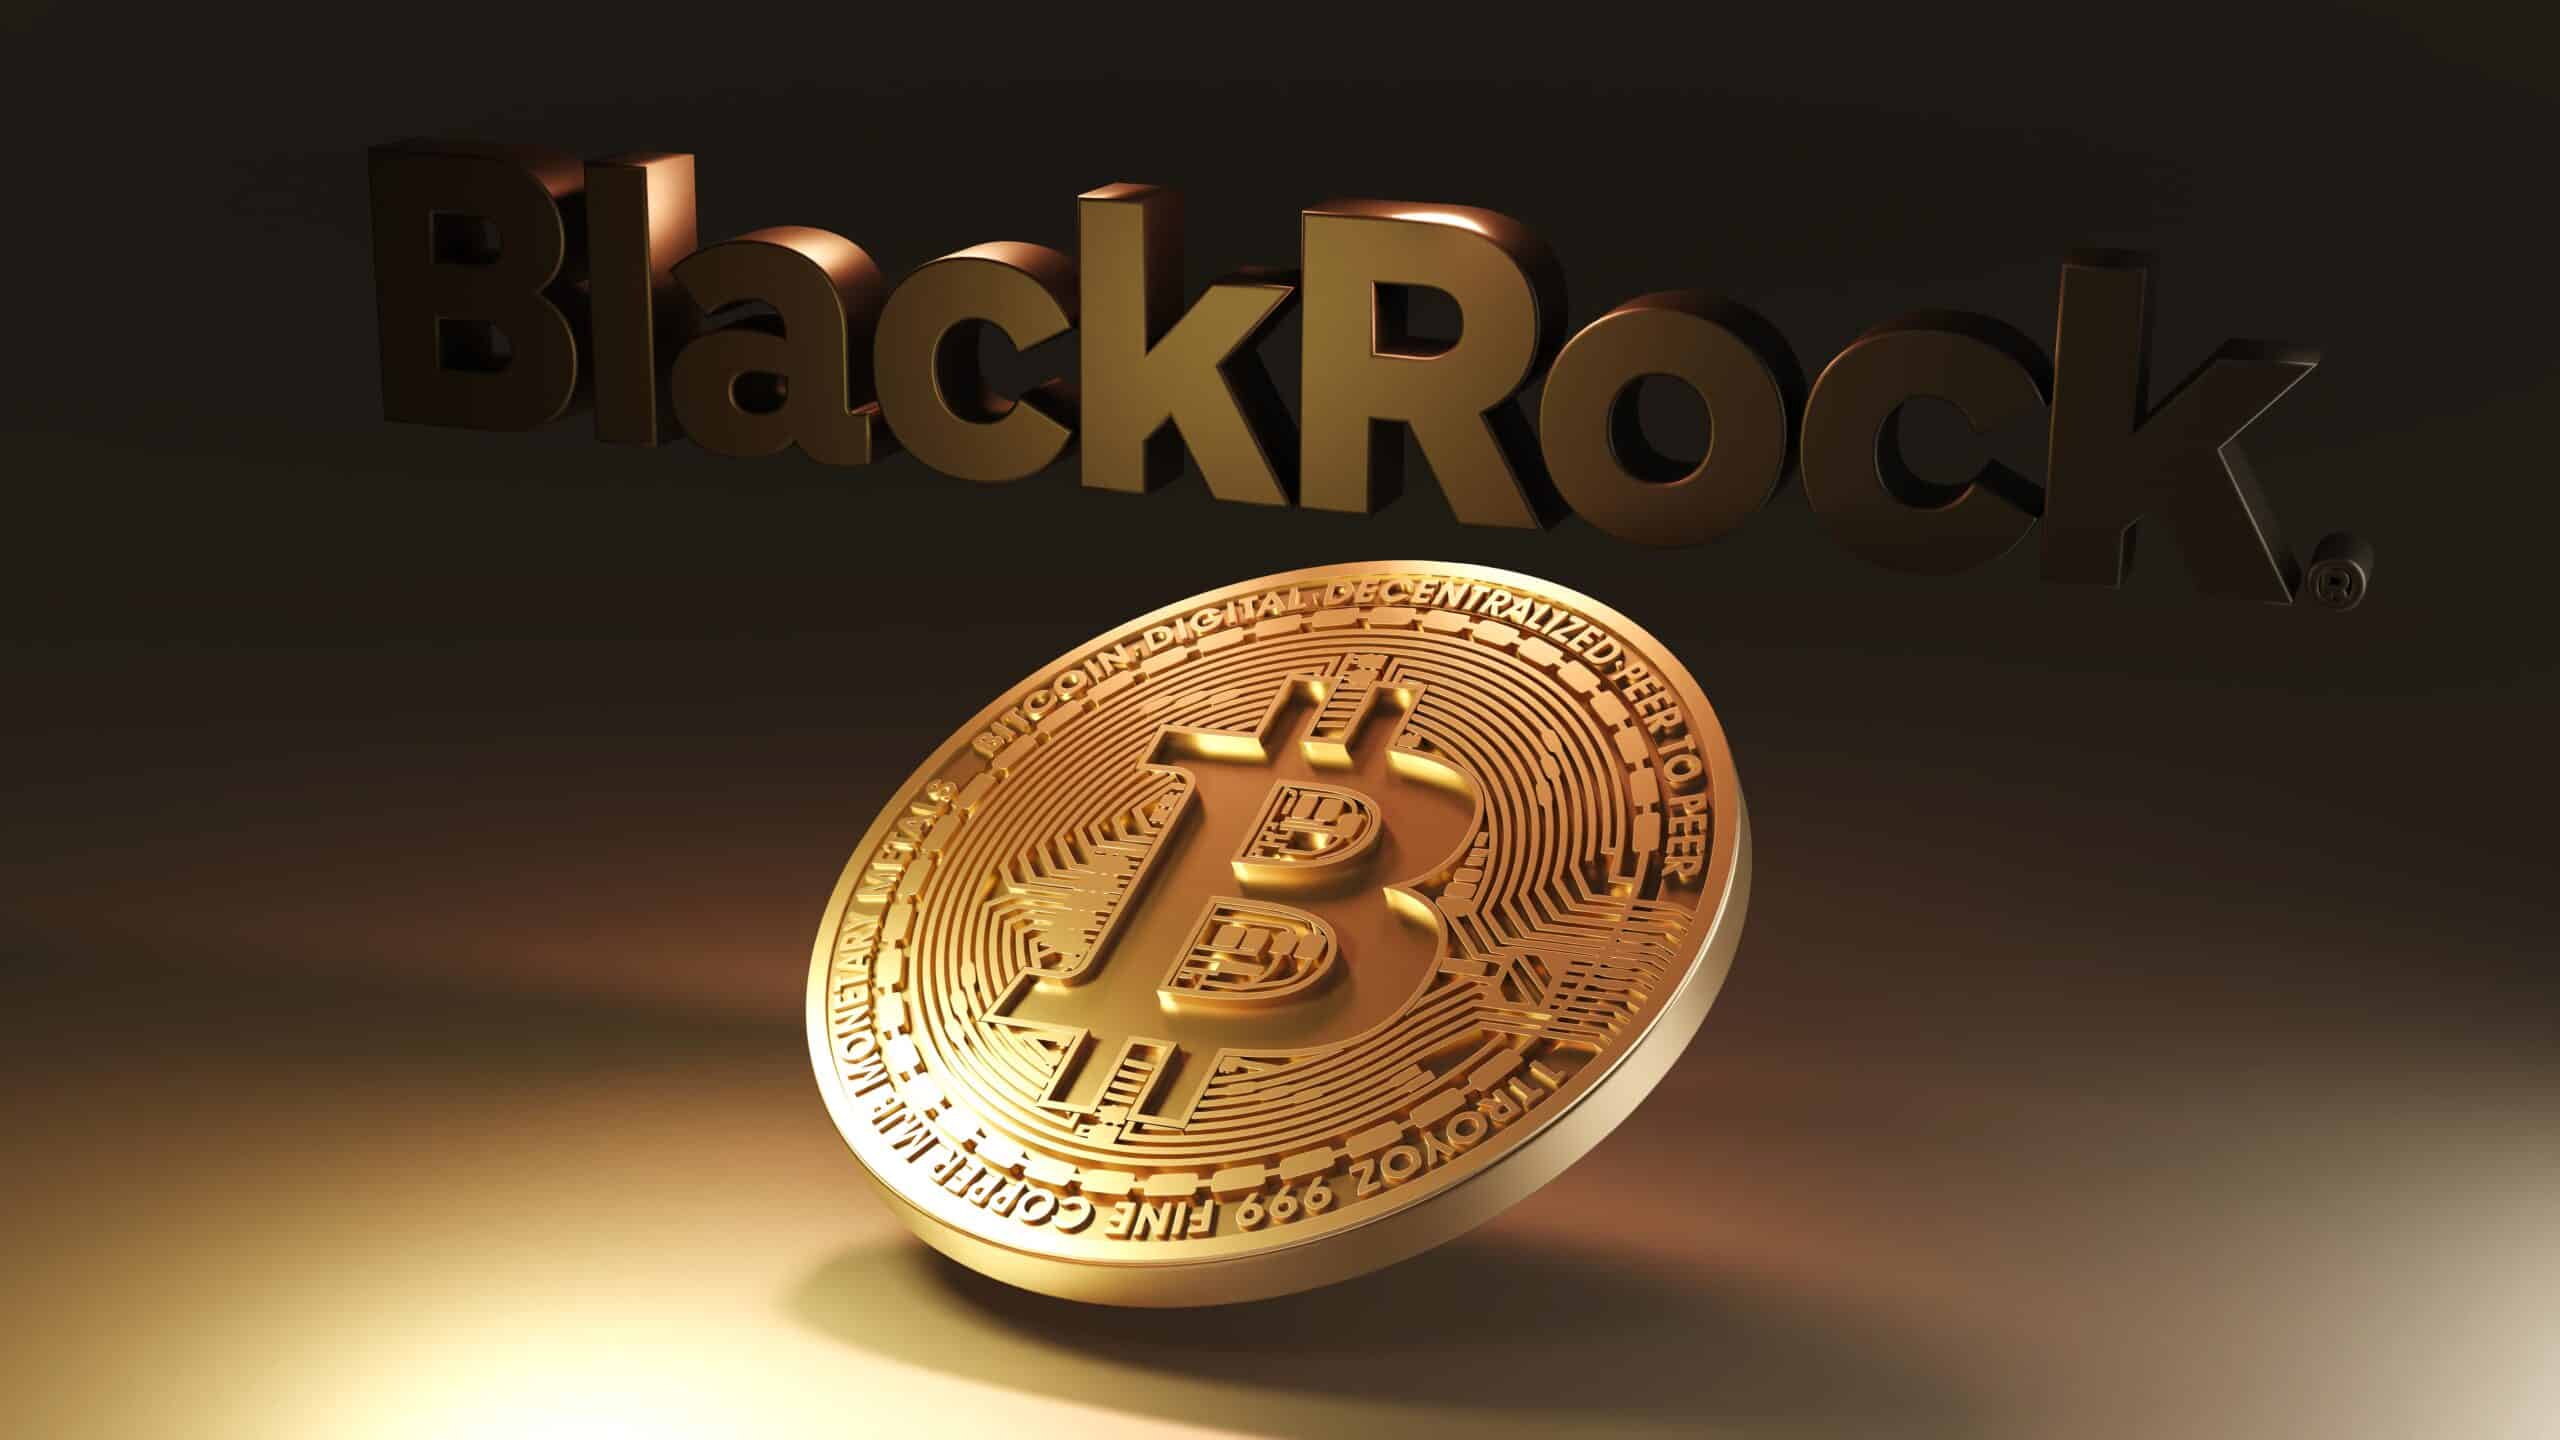 taustal blackrocki logo ja esiplaanil kuldne bitcoin